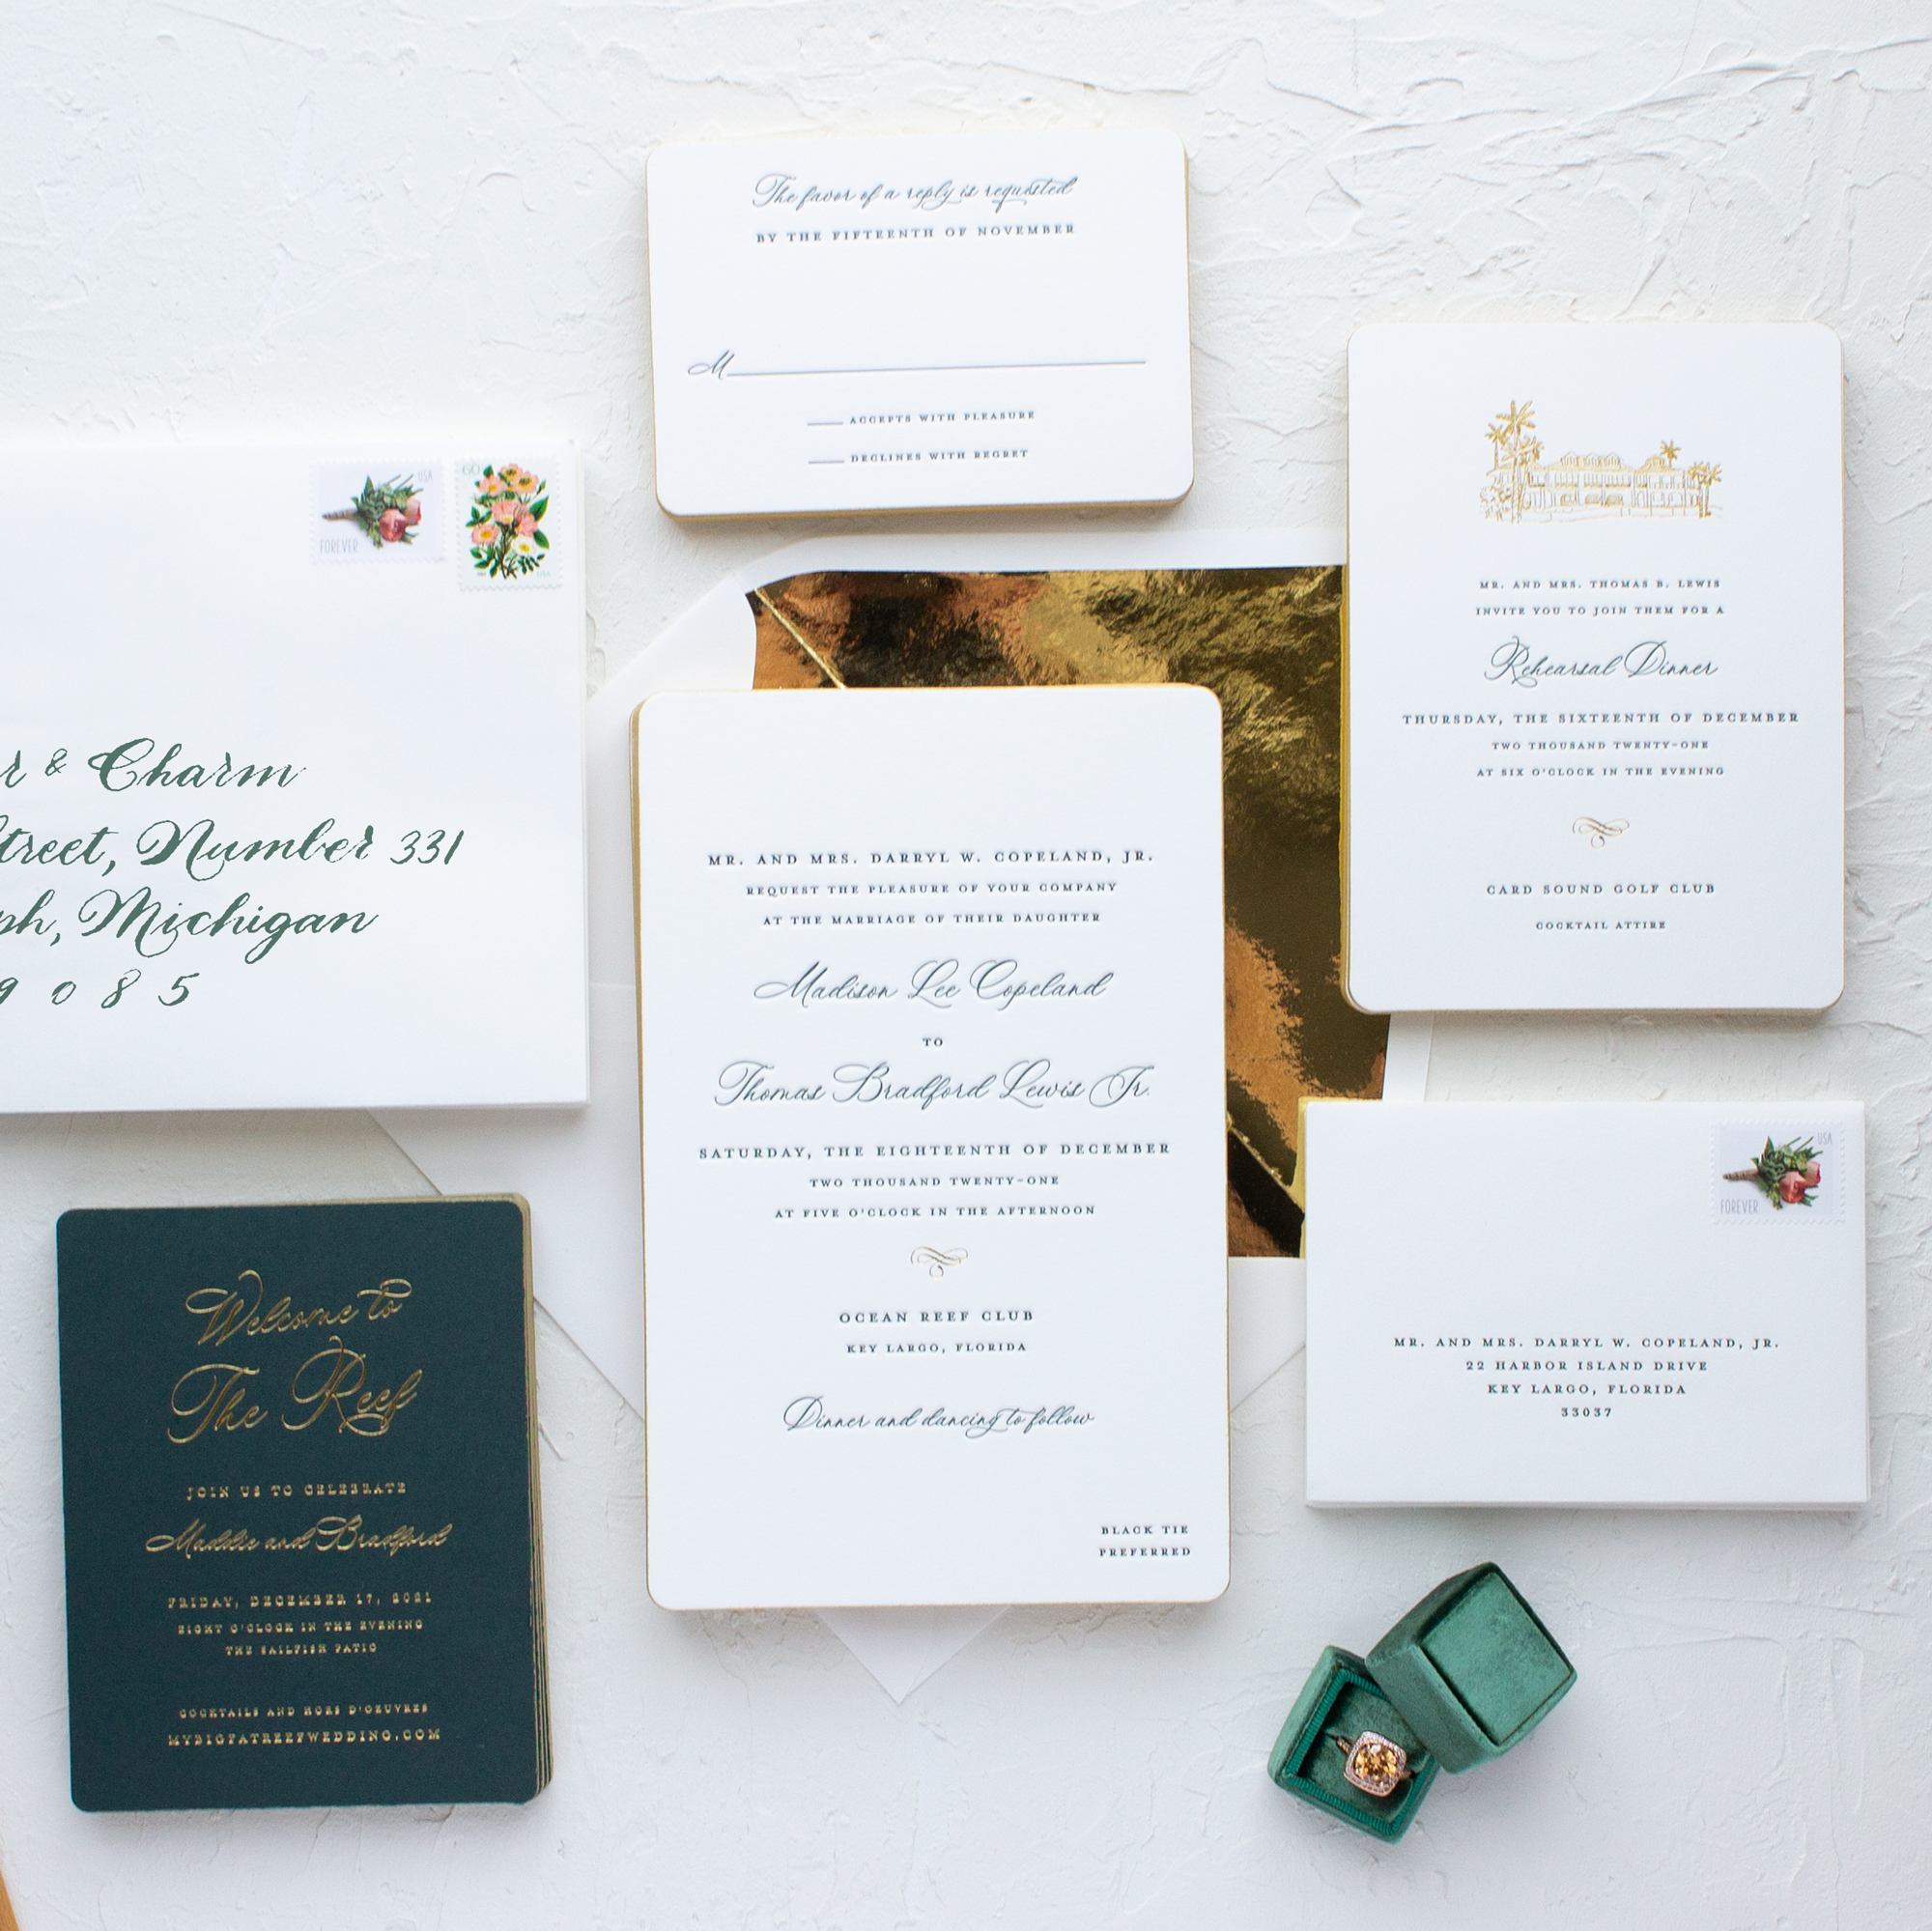 Formal wedding invitations oversized